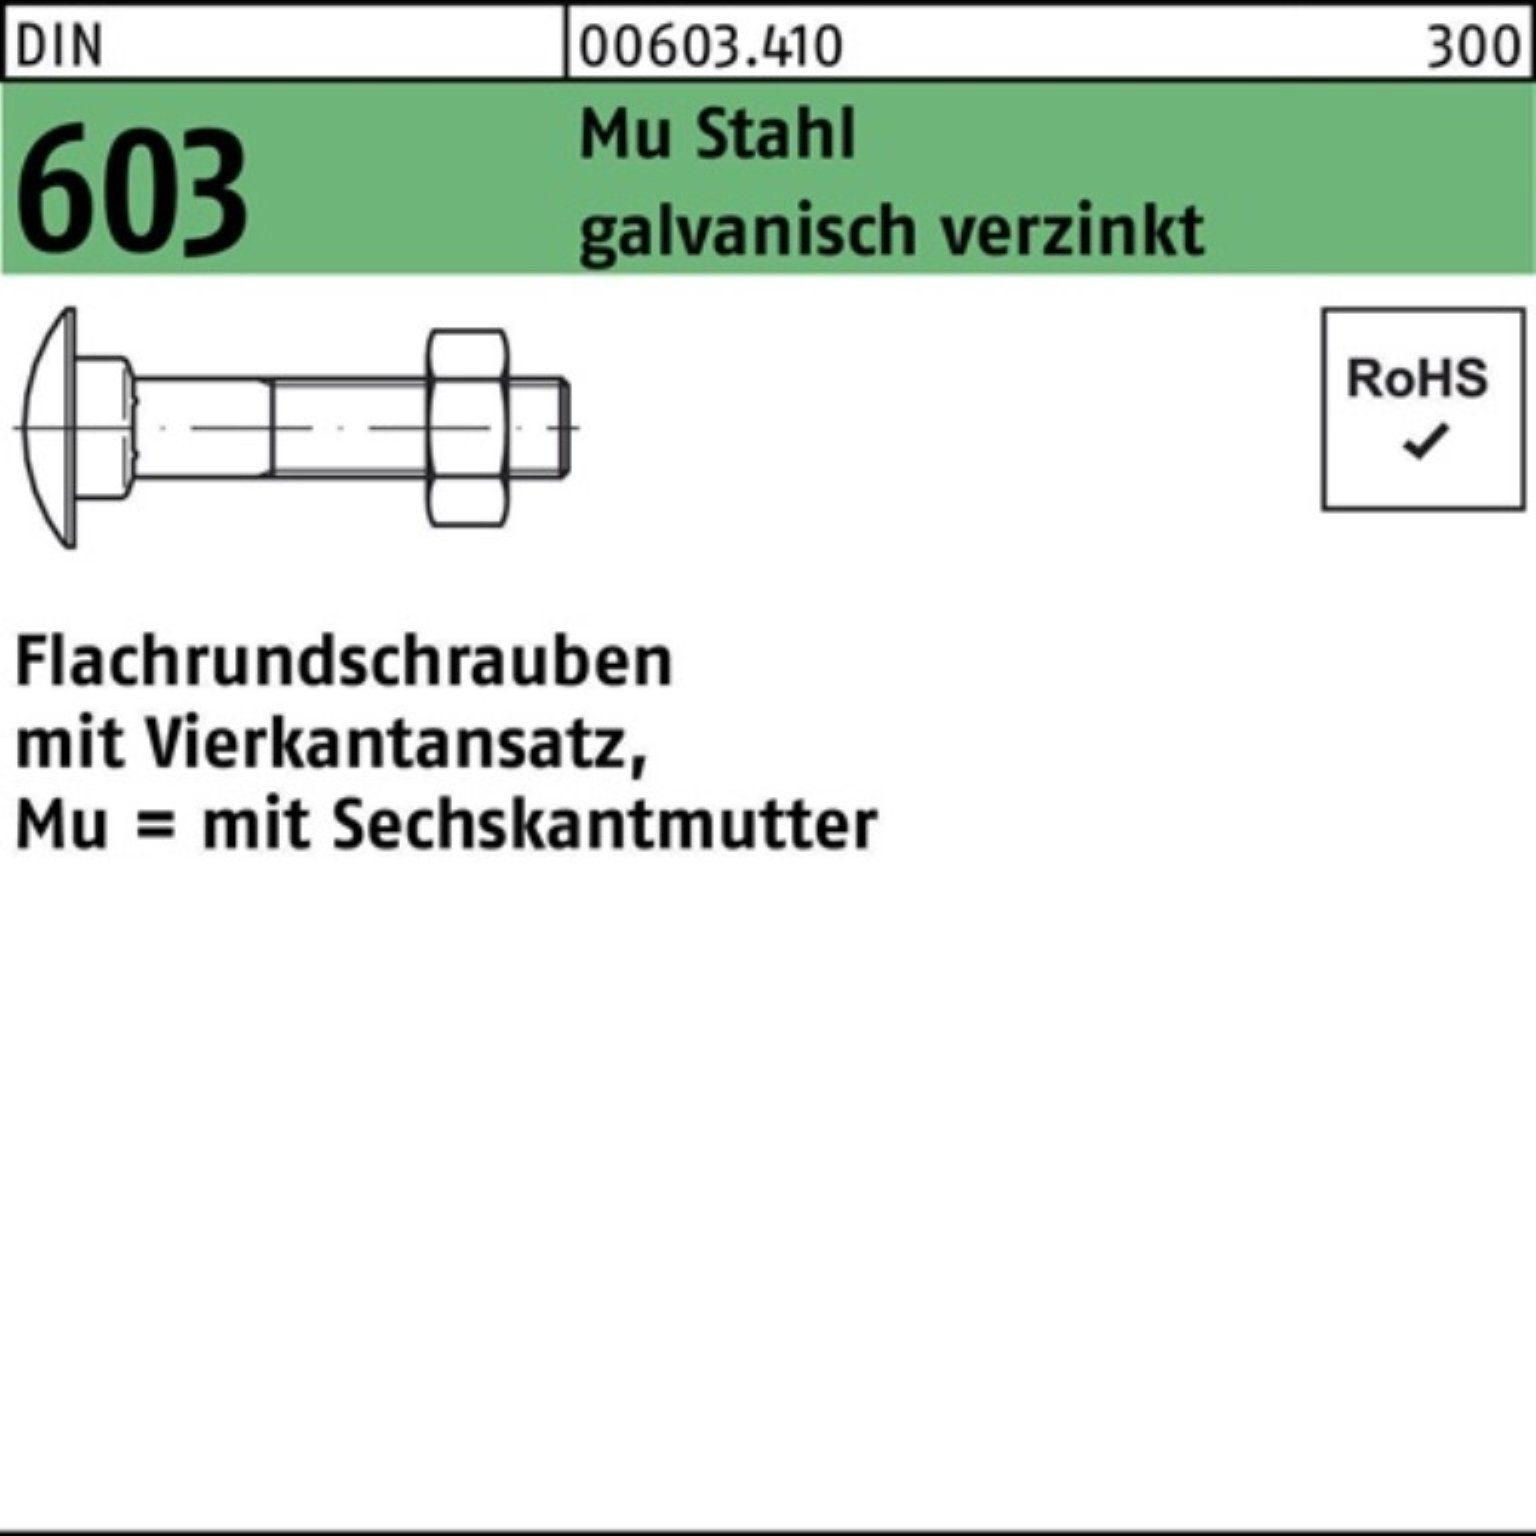 603 Flachrundschraube Vierkantansatz/6-ktmutter Reyher 100er M6x100 DIN Schraube Pack